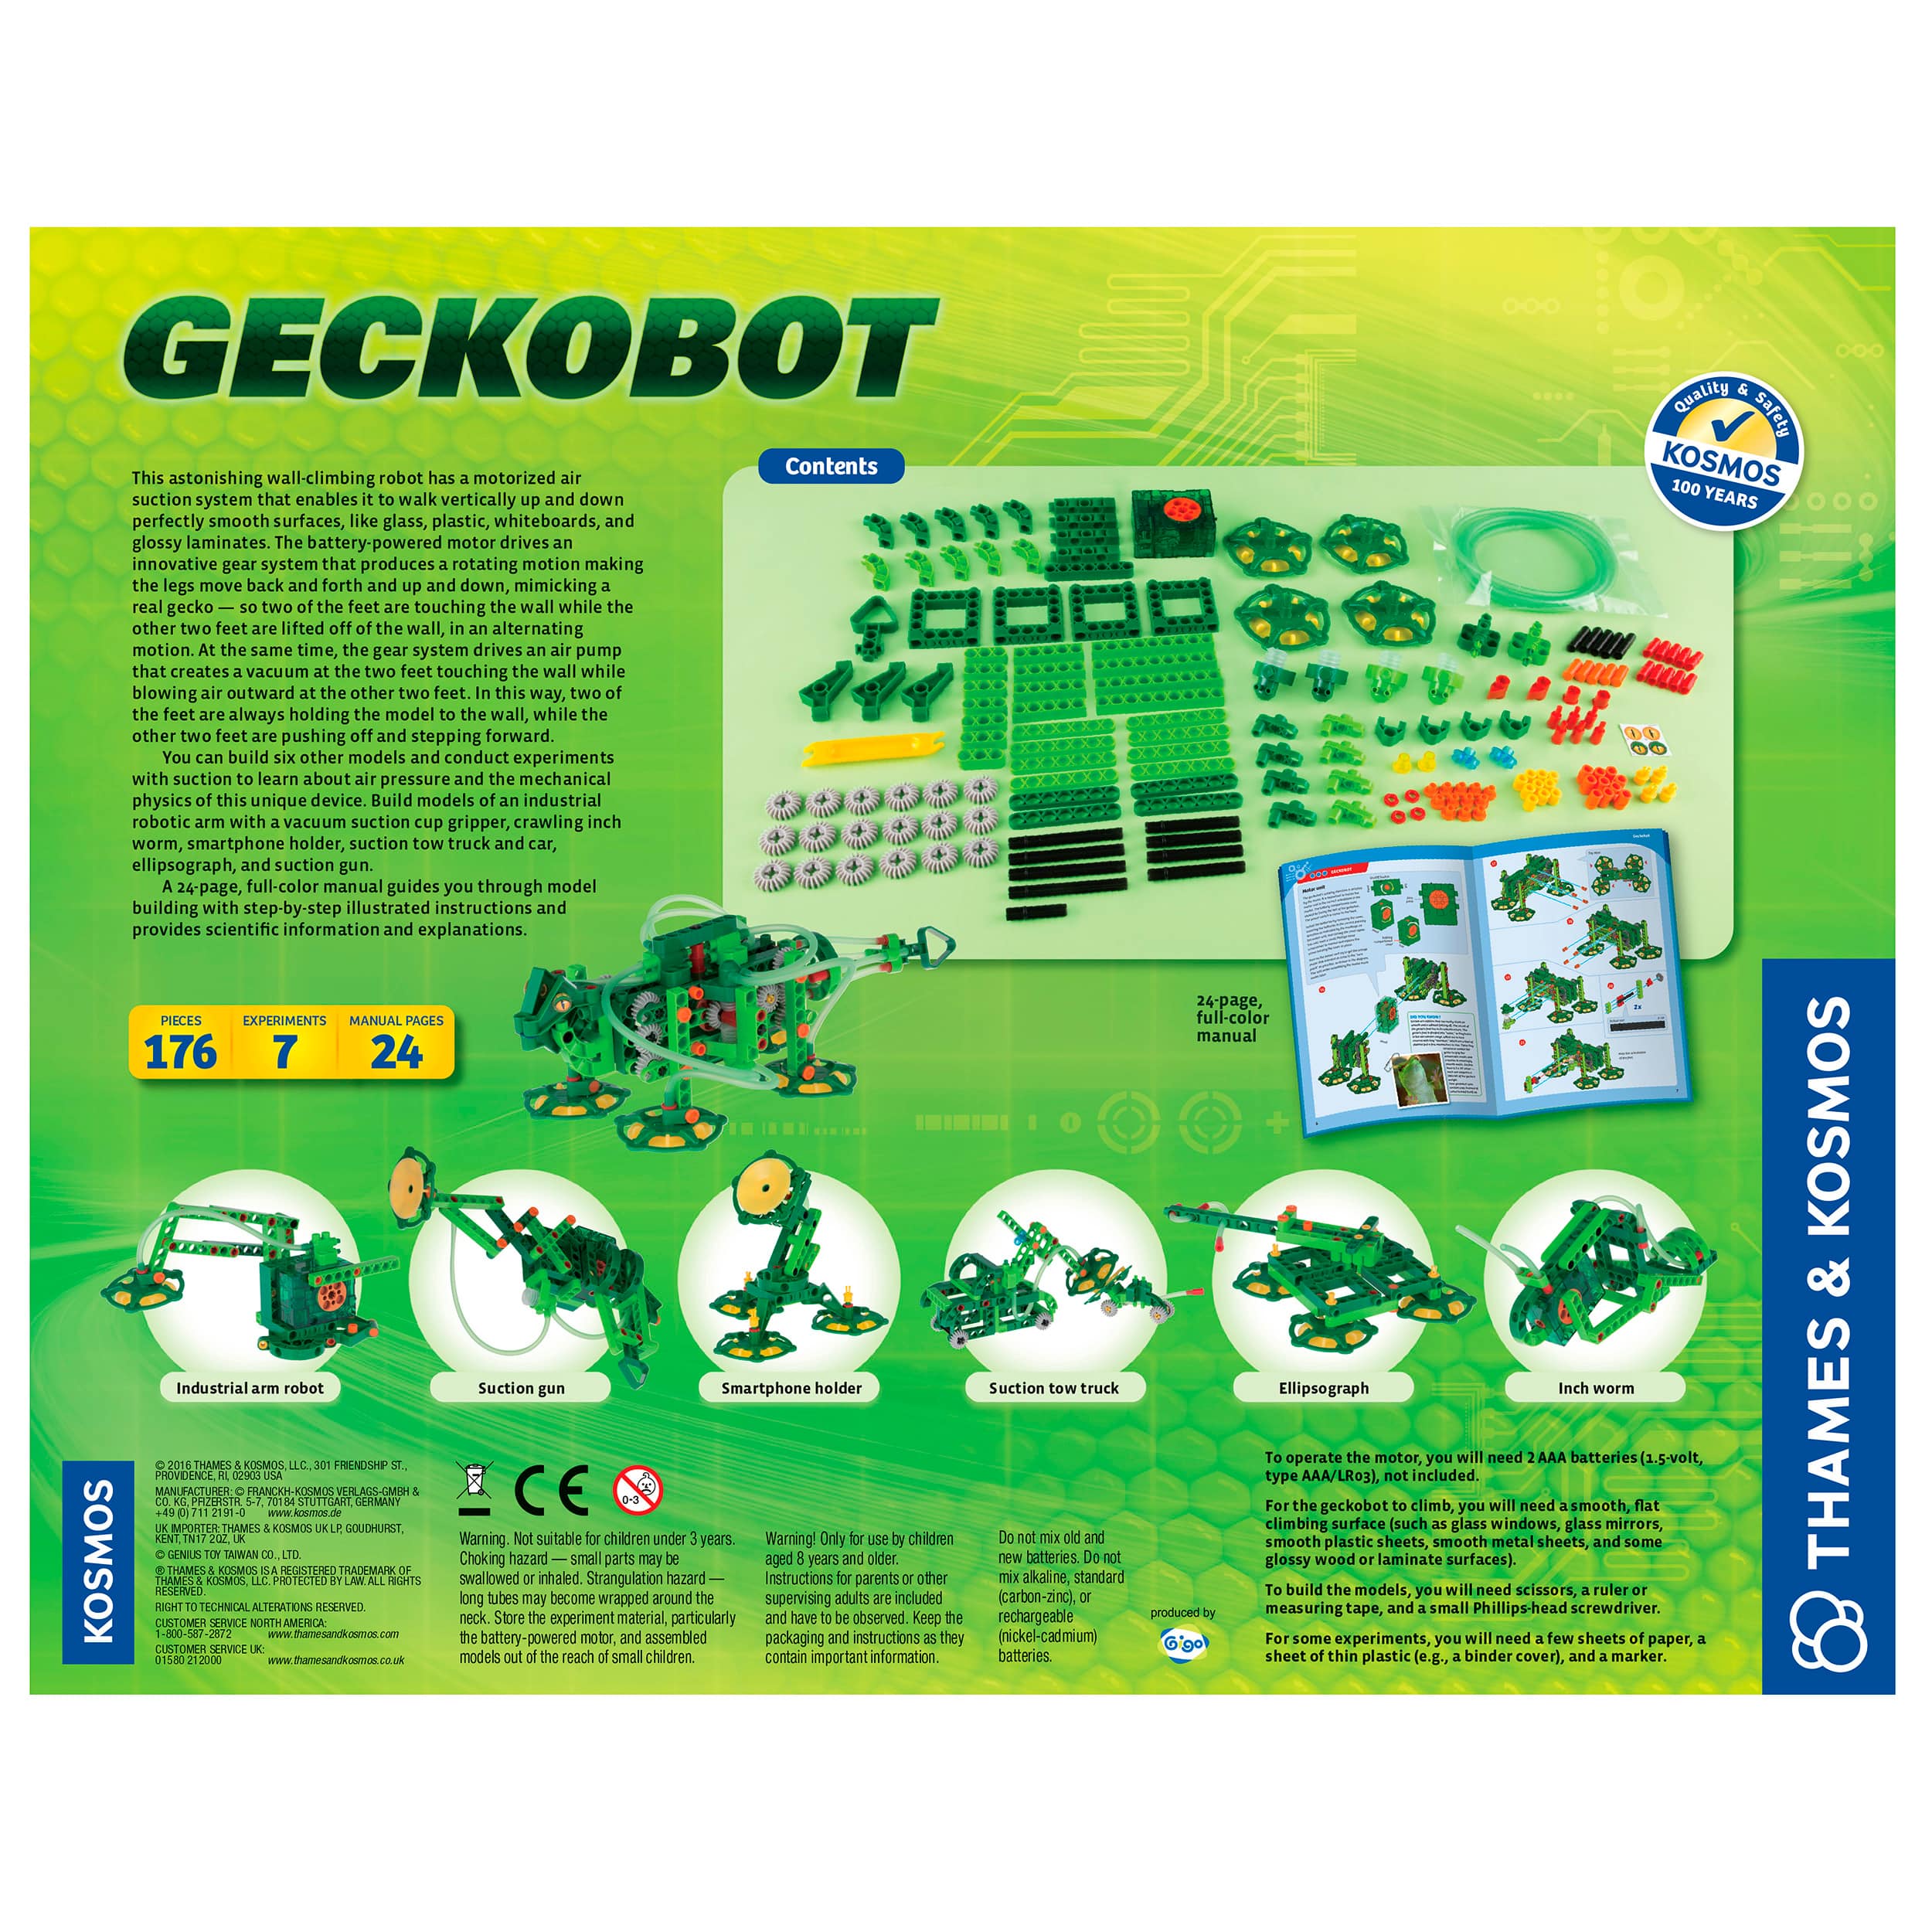 geckobot target